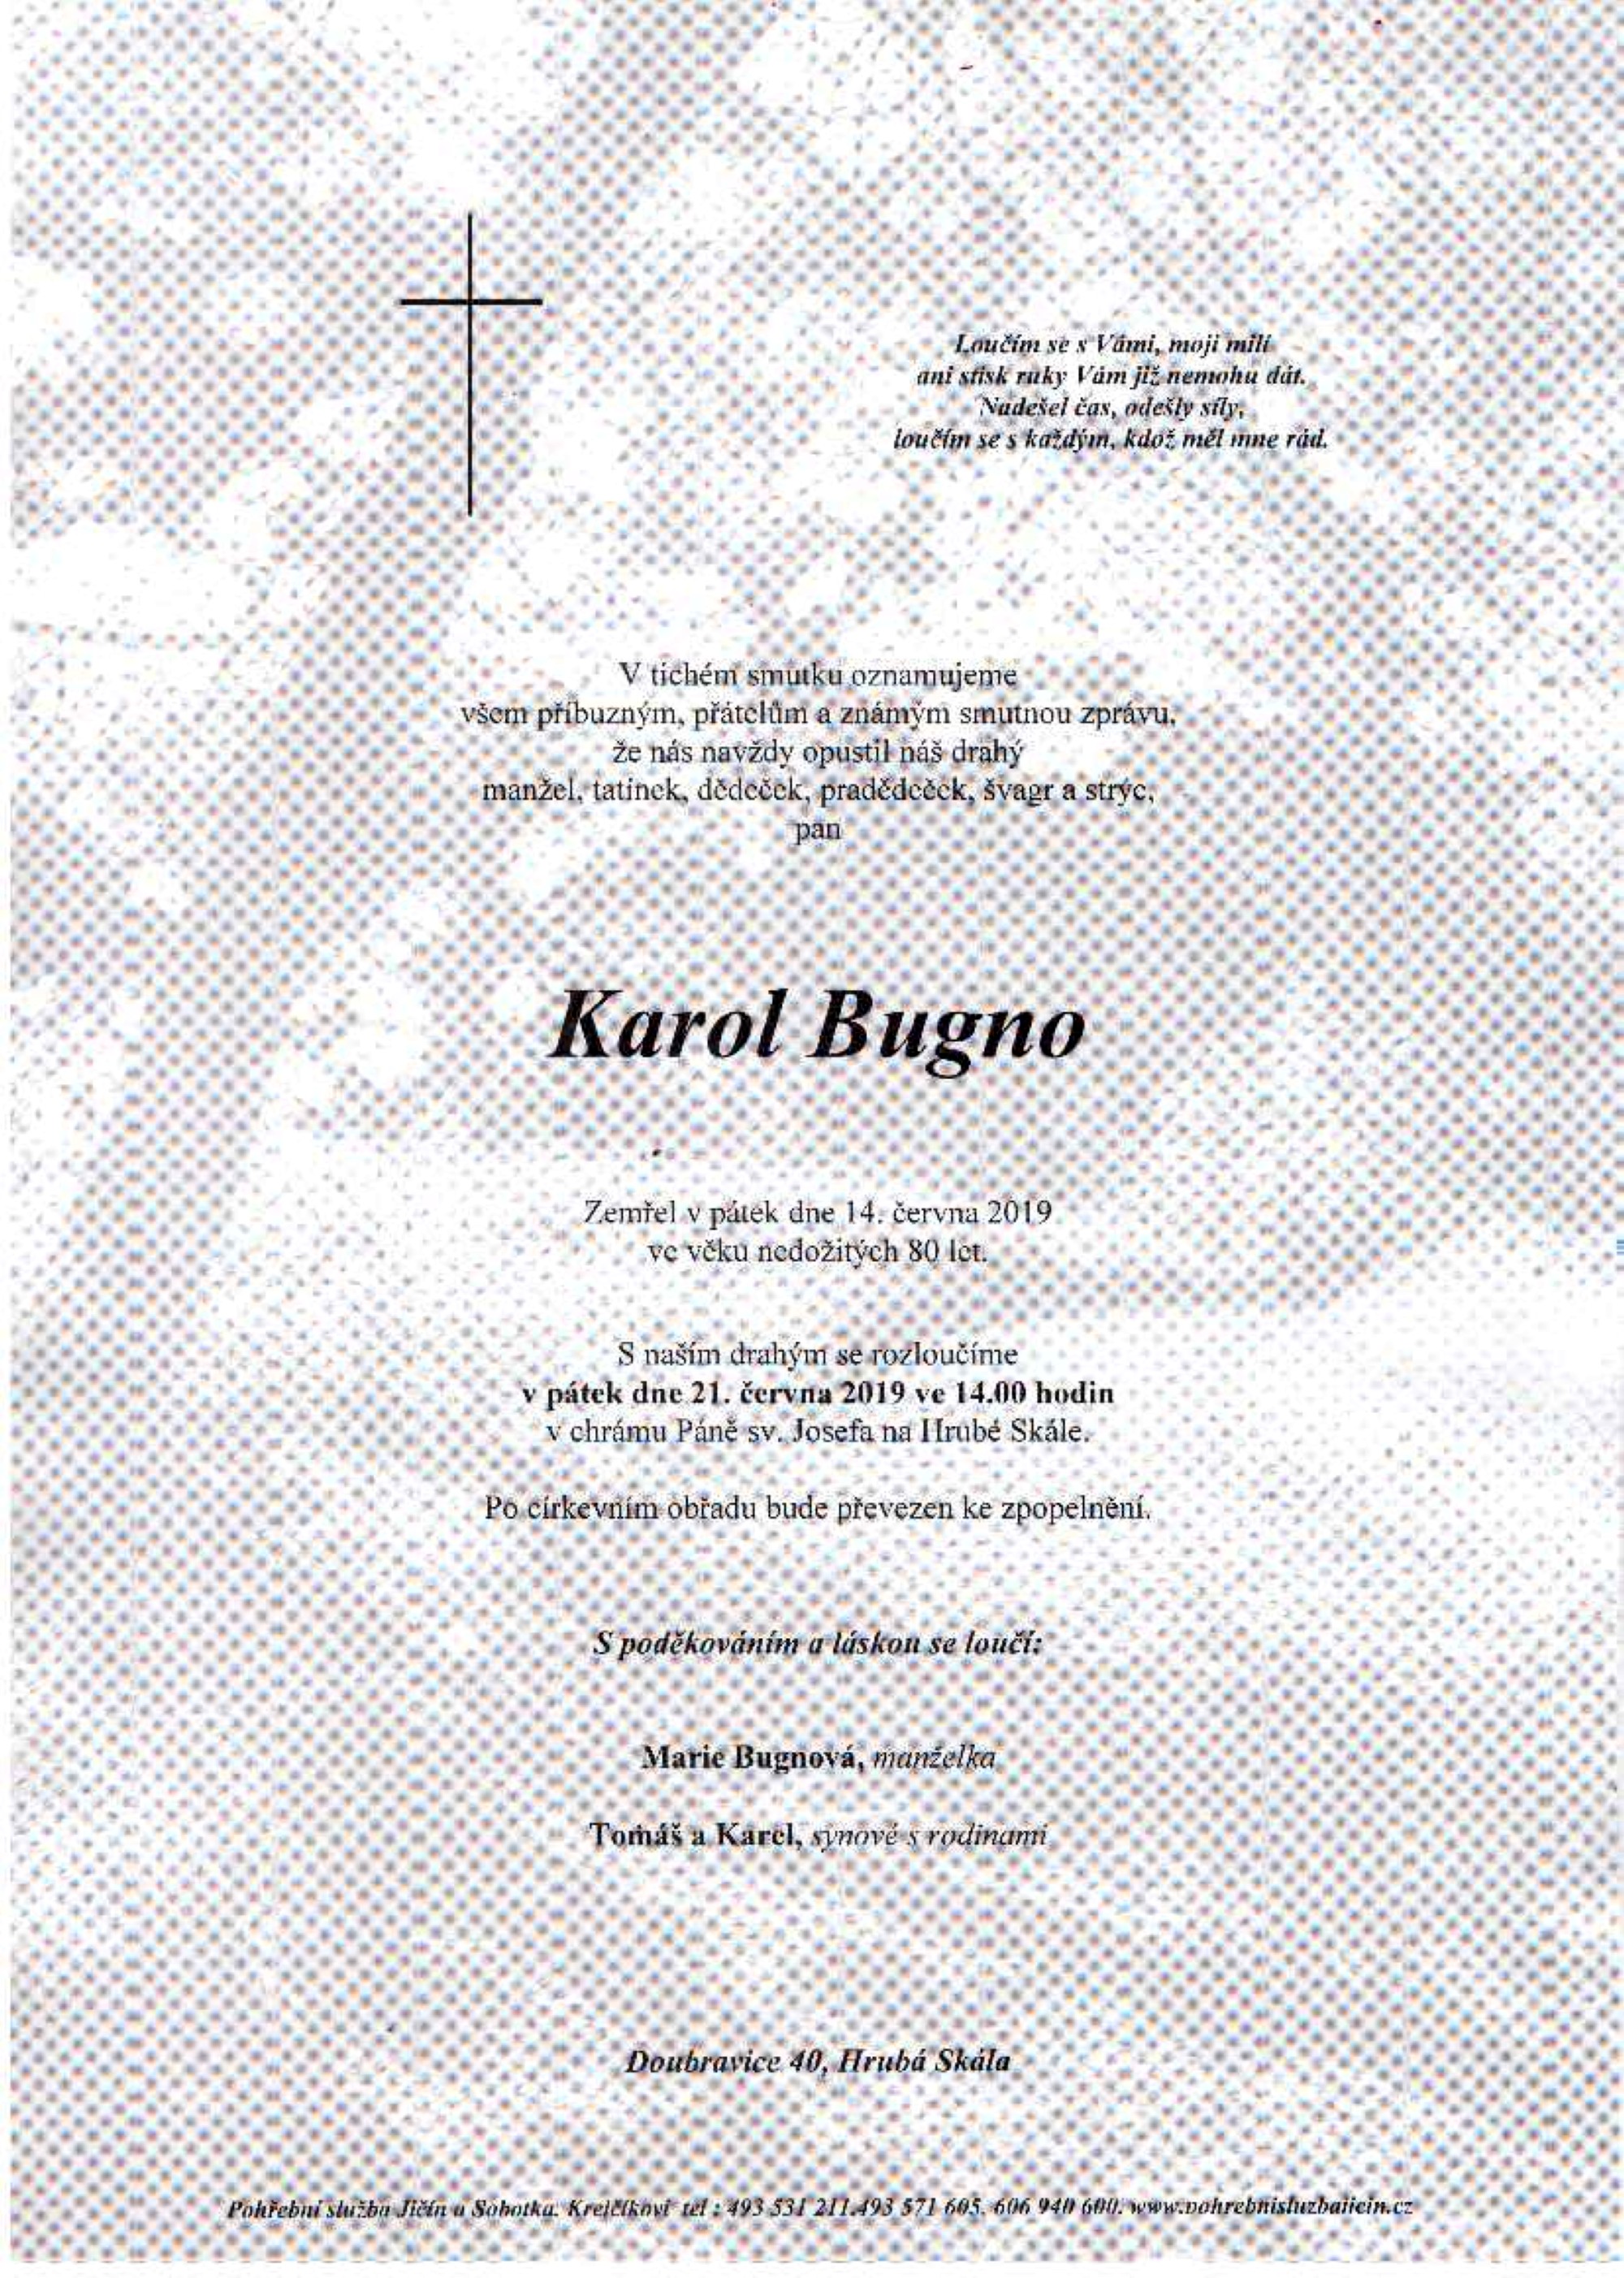 Karol Bugno